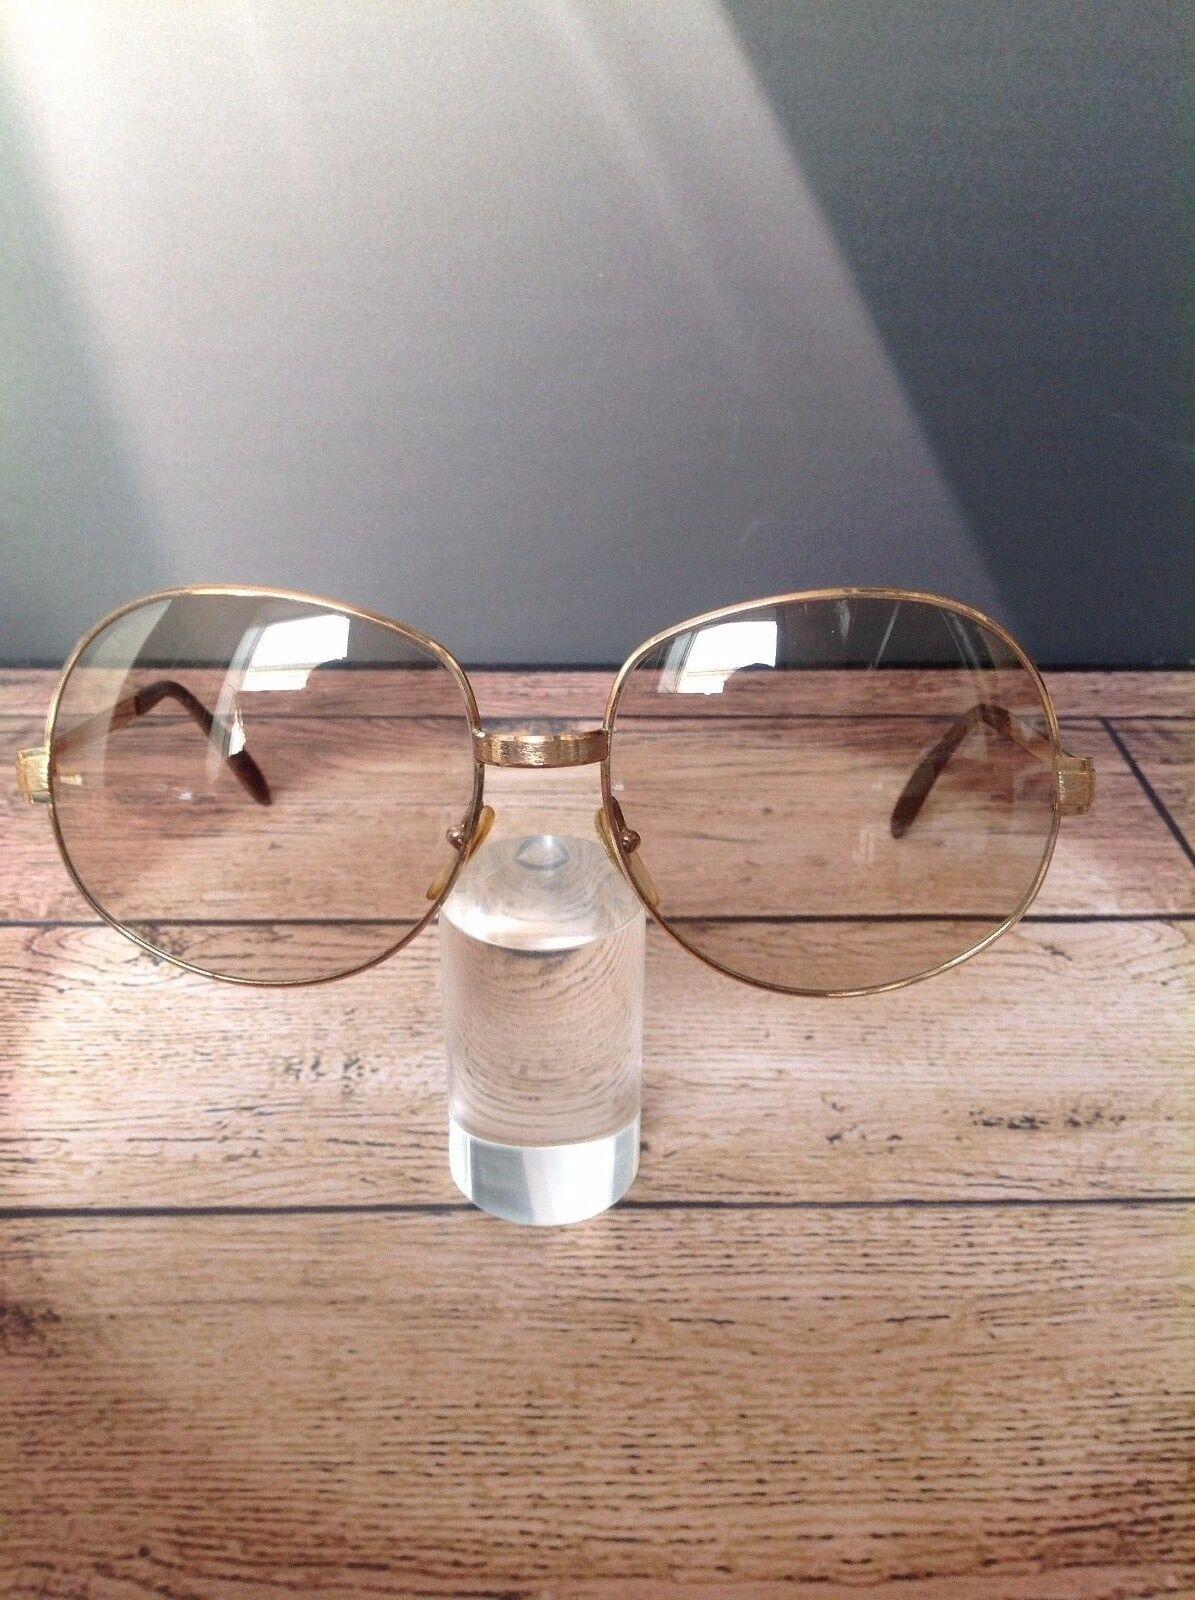 occhiale sole SAFILO vintage ELBA SUNGLASSES LUNETTES SONNENBRILLEN Italy made